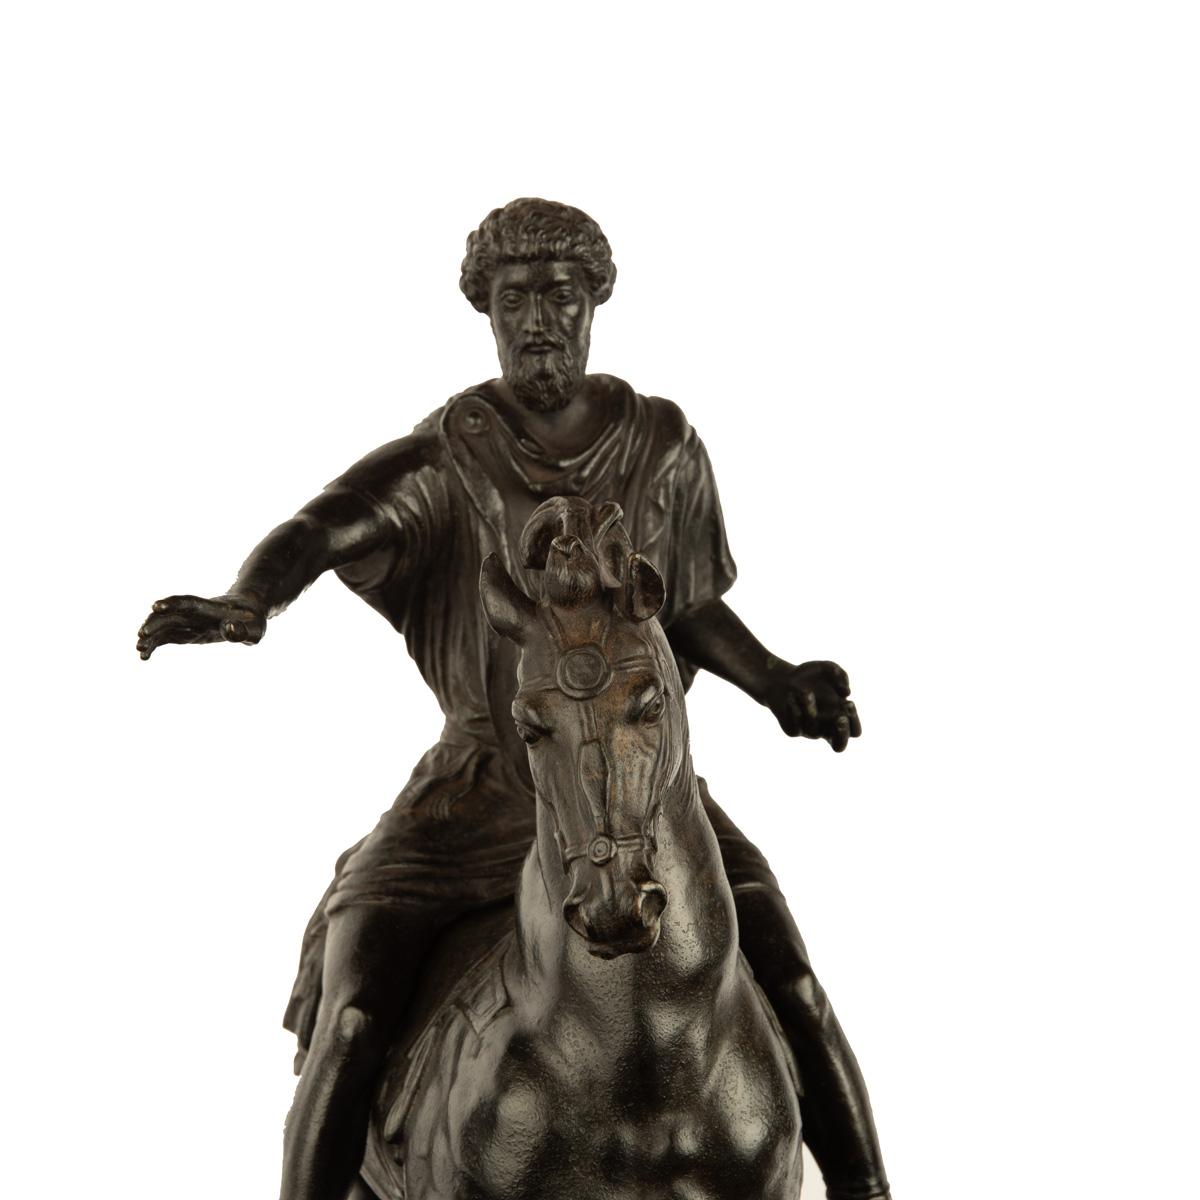 A Grand Tour equestrian bronze of Marcus Aurelius, after Hopfgarten